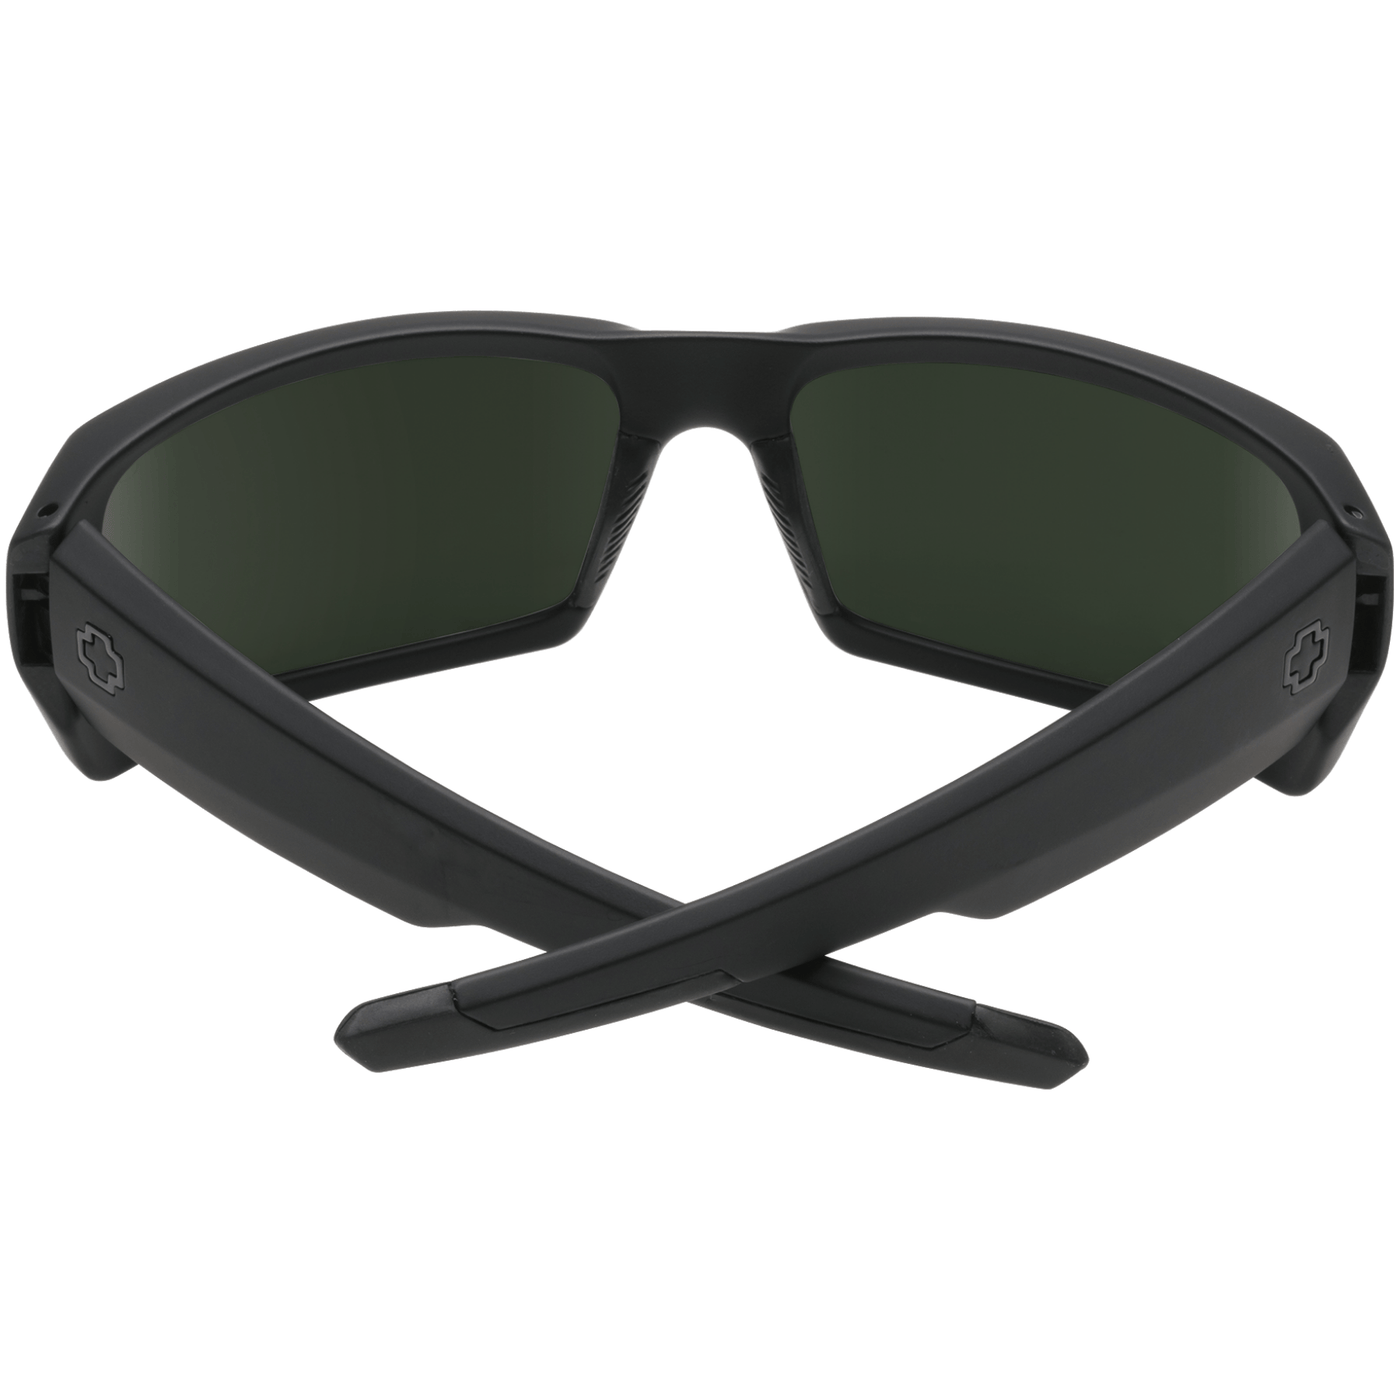 SPY GENERAL Polarized Sunglasses - Soft Matte Black 8Lines Shop - Fast Shipping